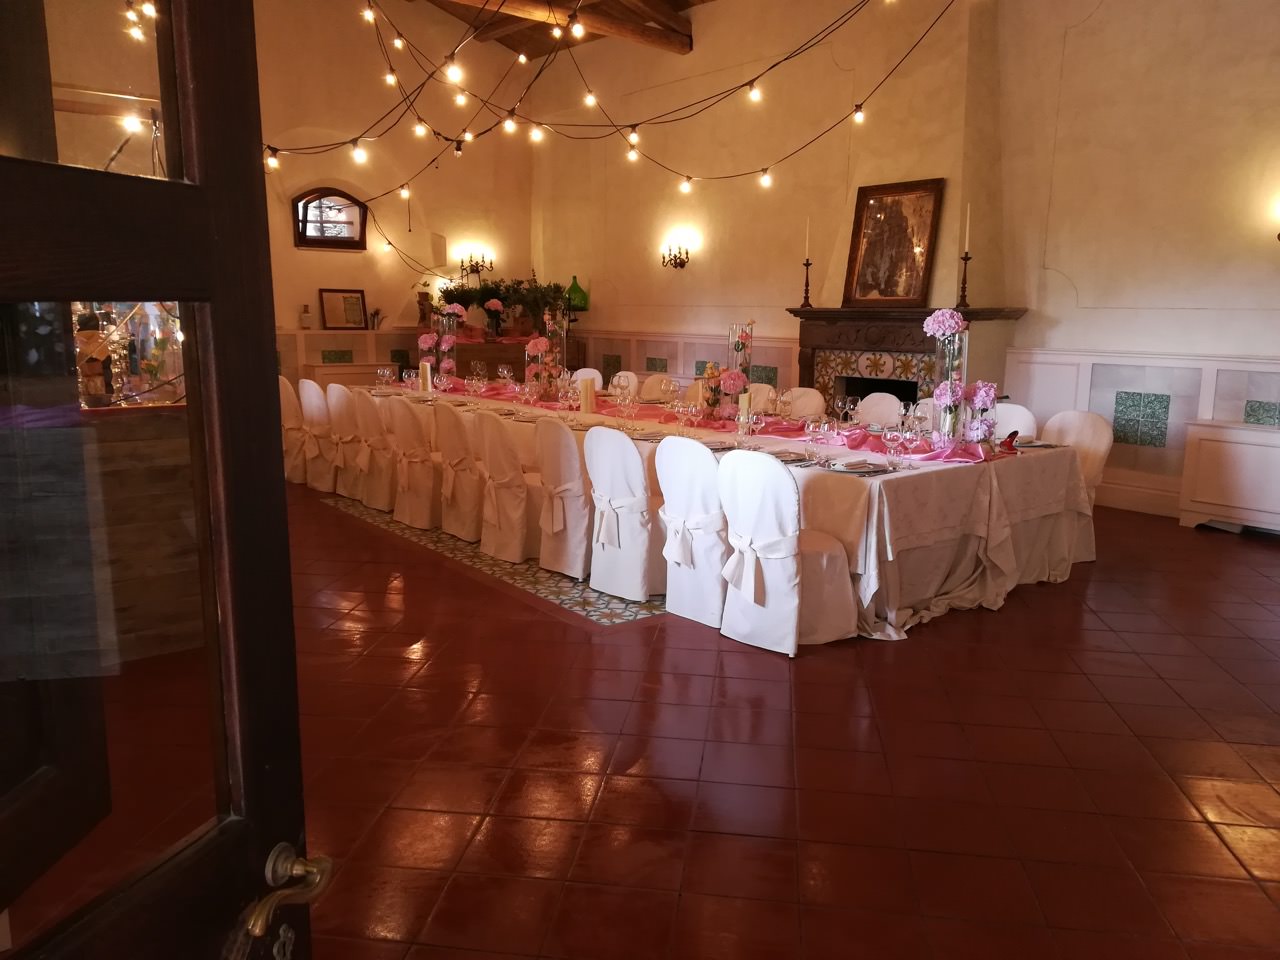 Interiors of the reception rooms for weddings with floral arrangements - Villa Ventura - Falerna - Catanzaro - Calabria